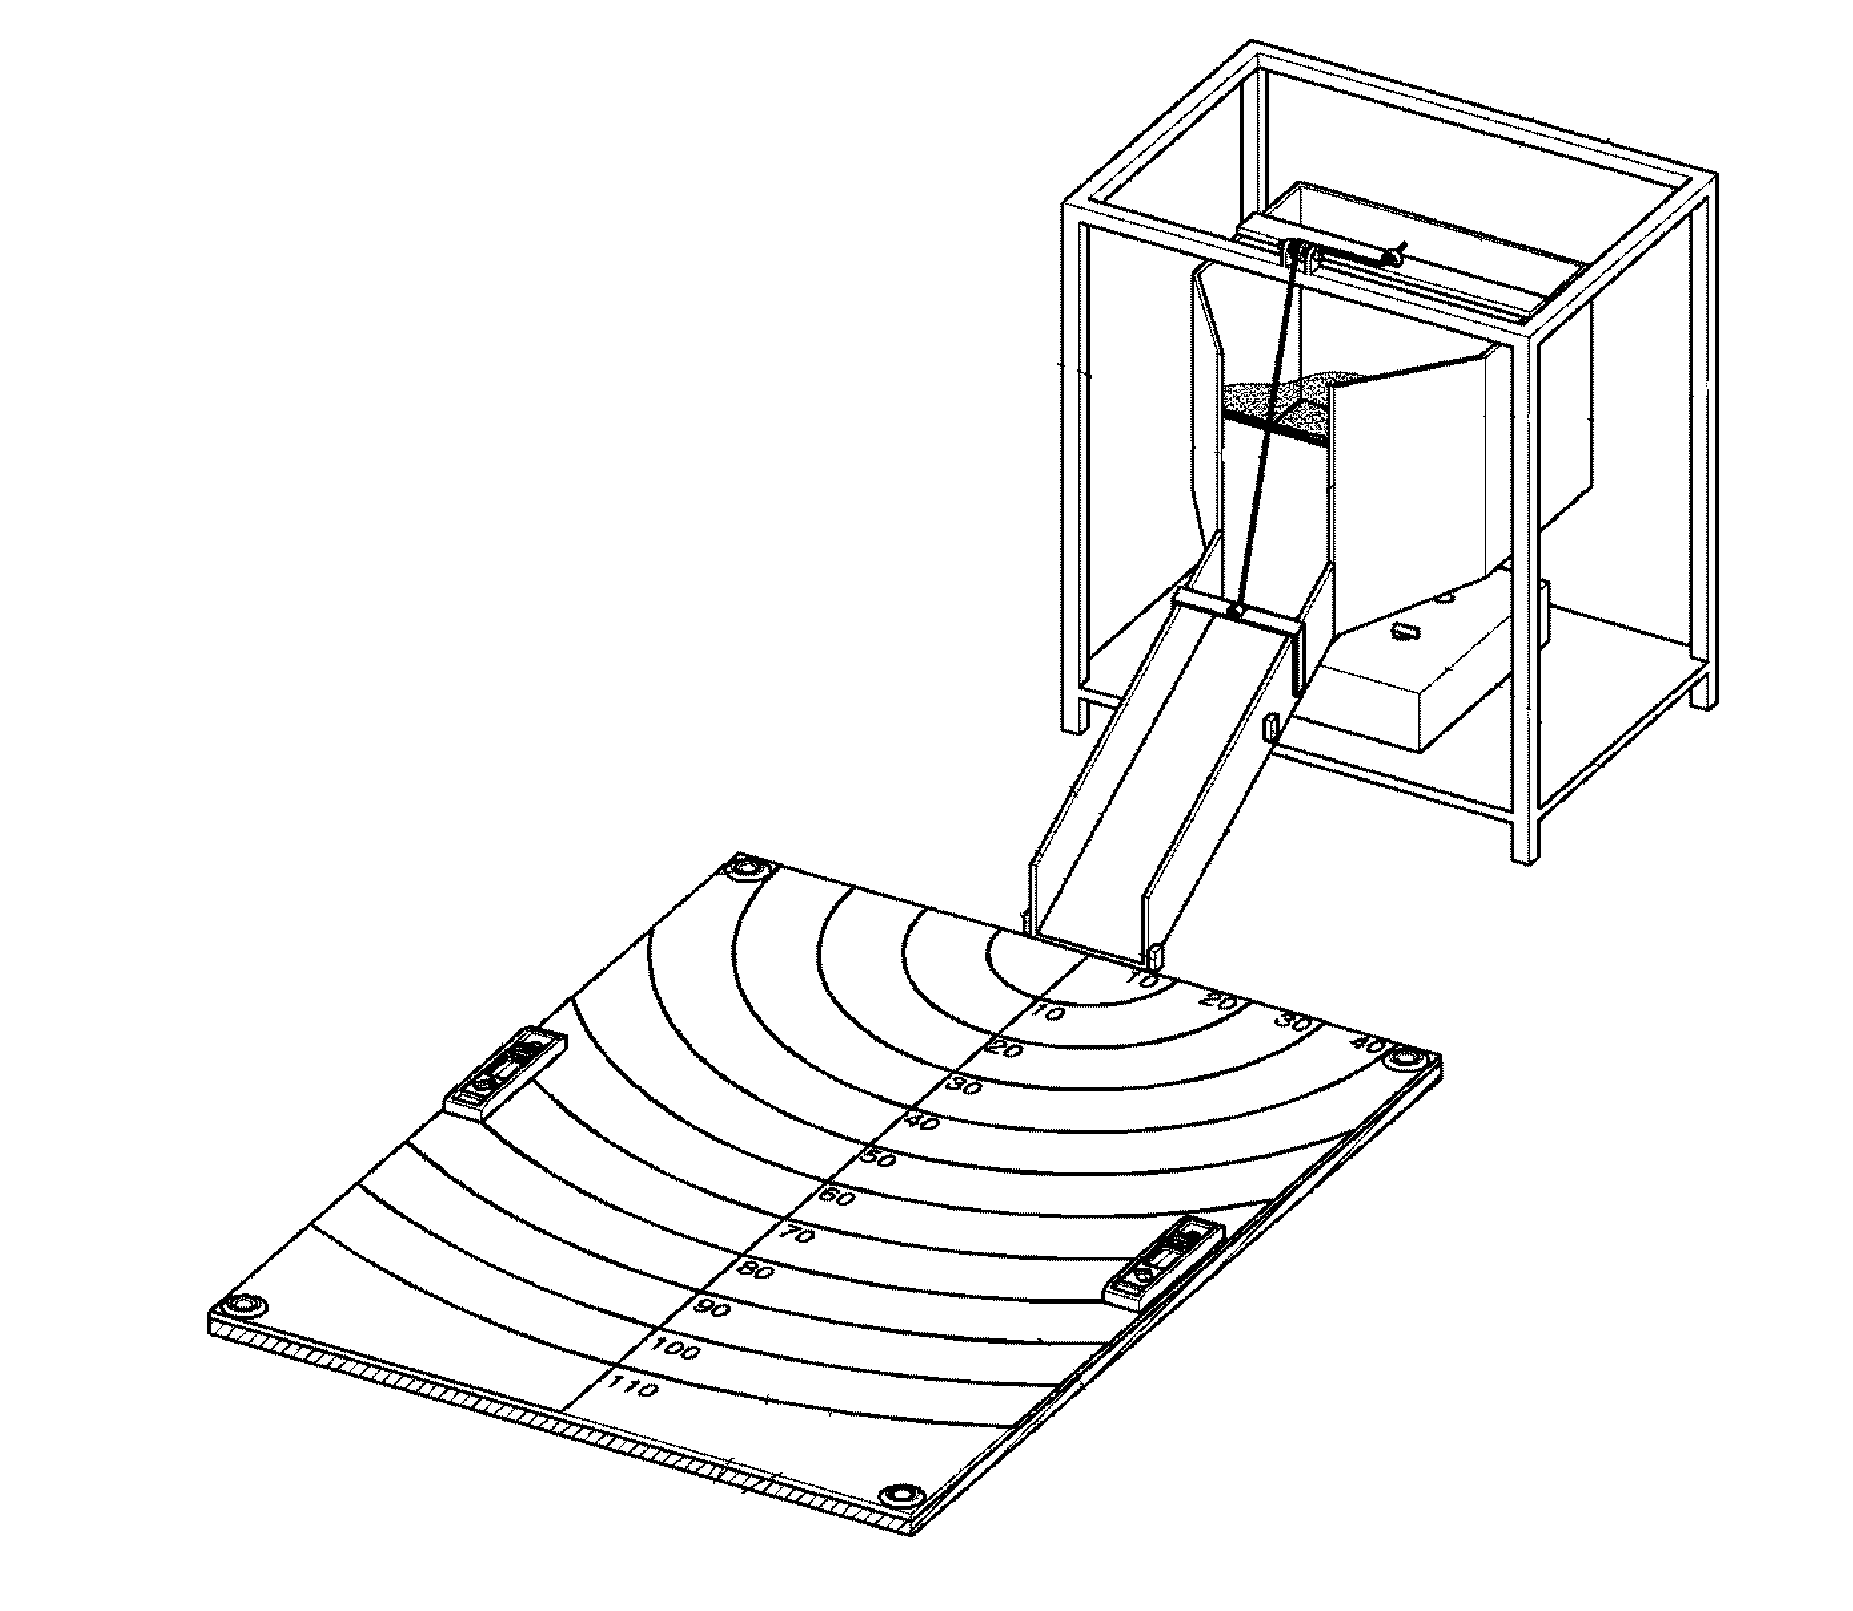 Debris-flow simulation apparatus having variable flume